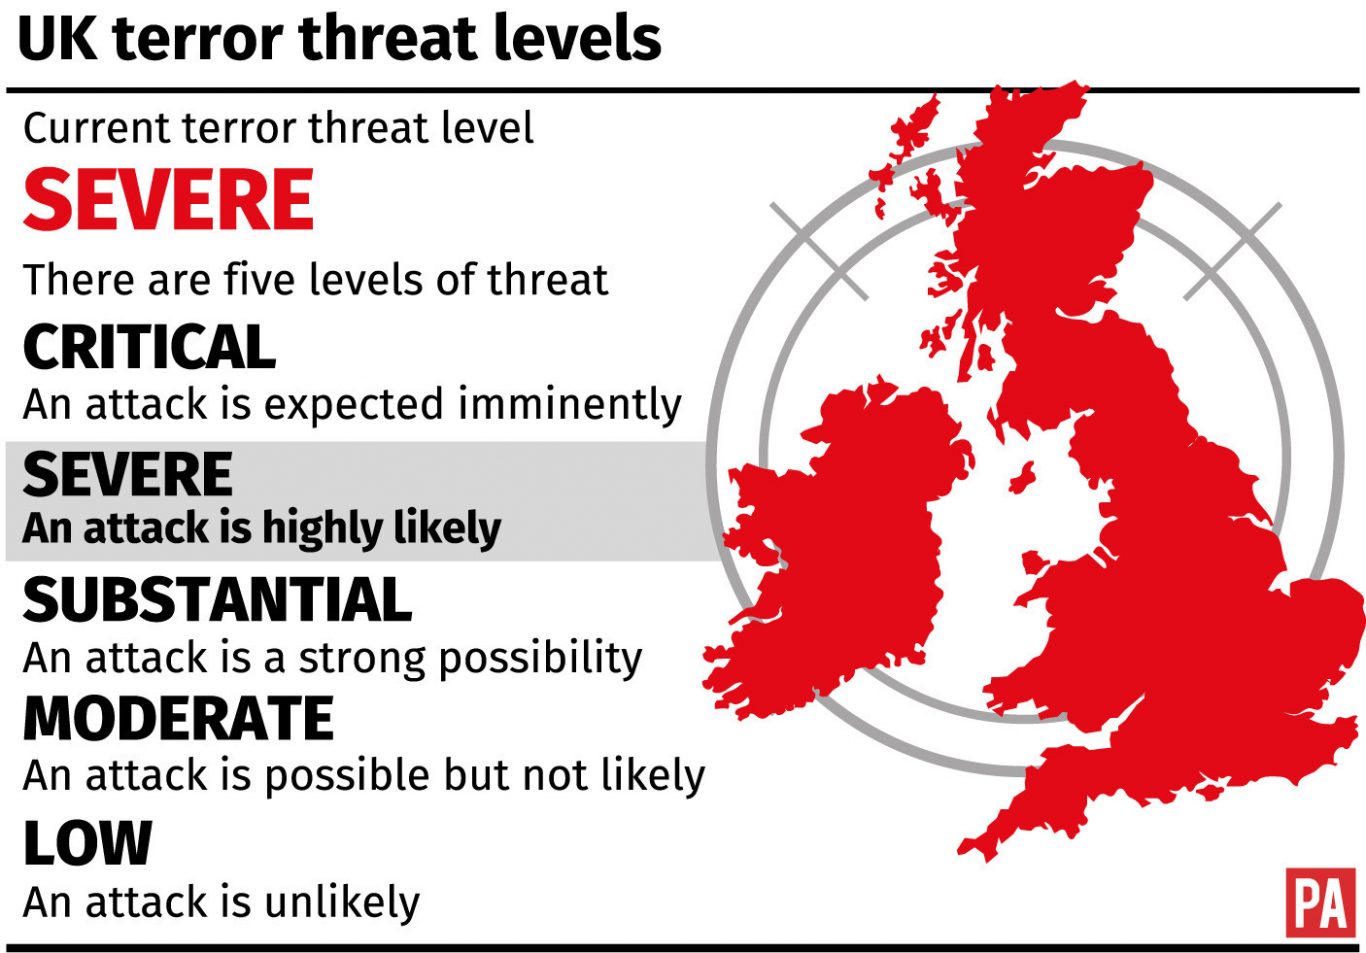 Current terror threat level in the UK